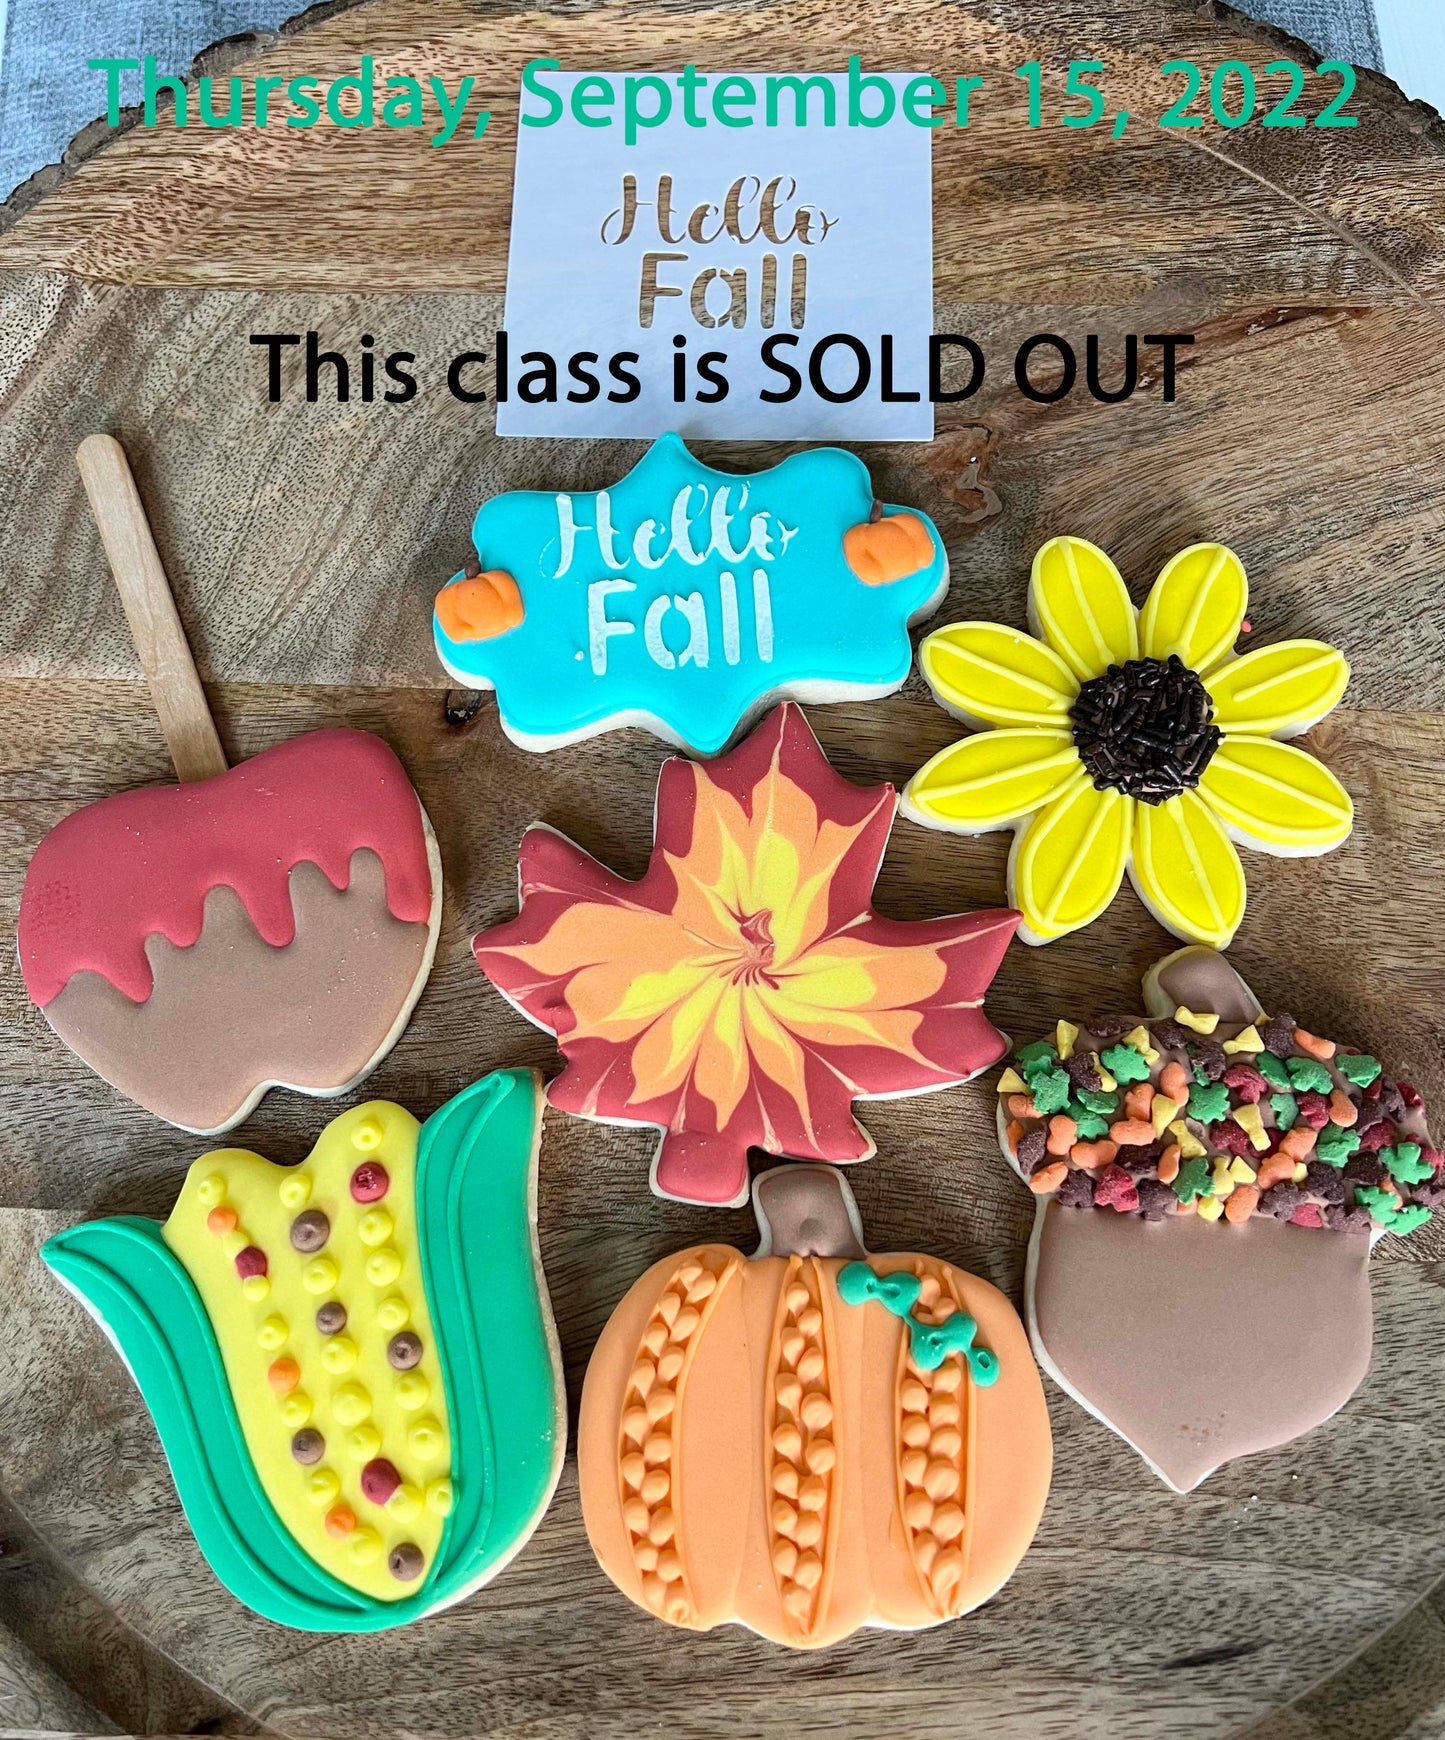 Thursday 9/15/2022: Sugar Cookie Decorating class - Fall Theme (Please read class details below)